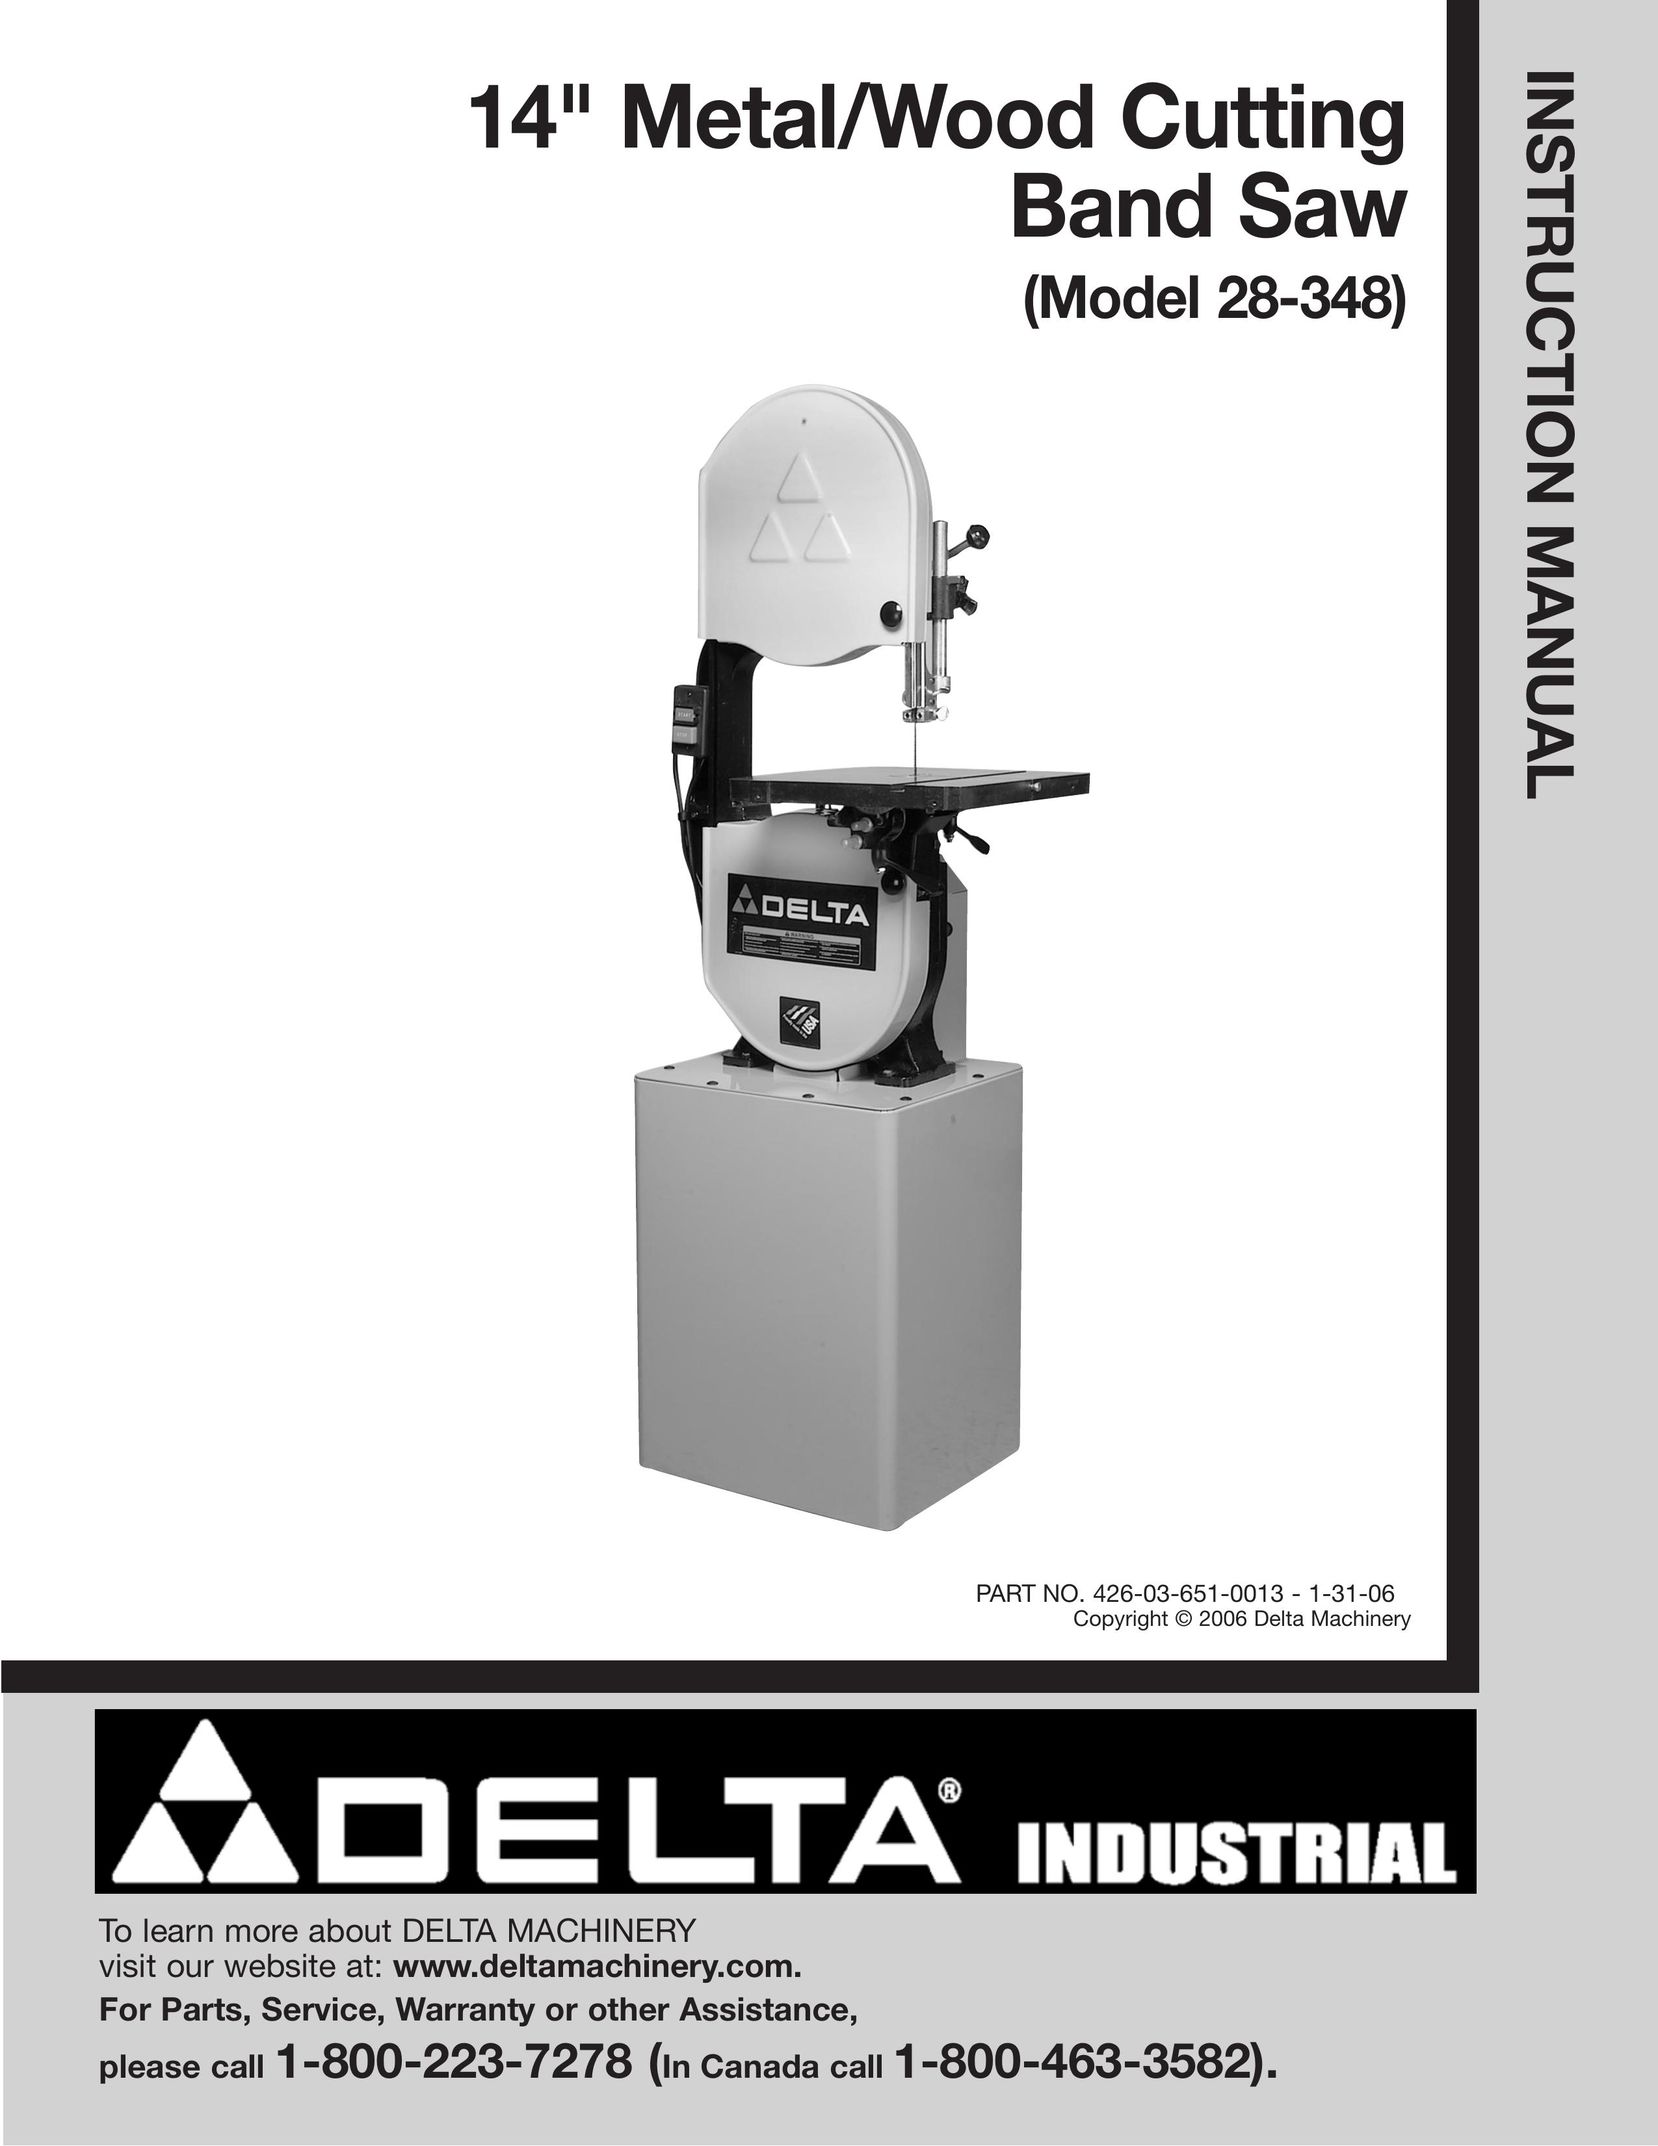 Delta 28-348 Saw User Manual